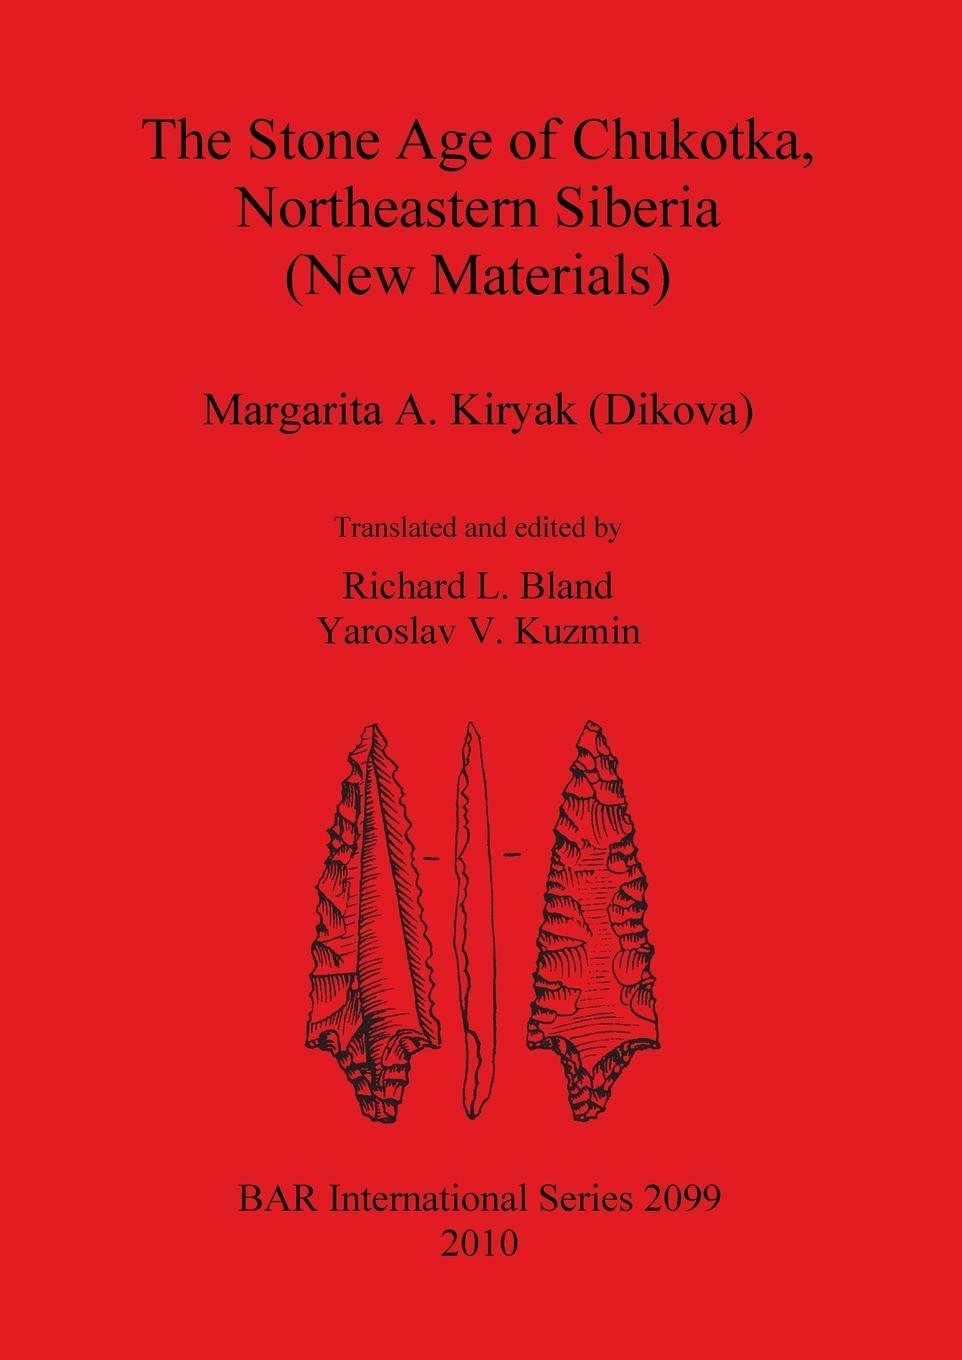 The Stone Age of Chukotka, Northeastern Siberia (New Materials) - Kiryak (Dikova), Margarita A.